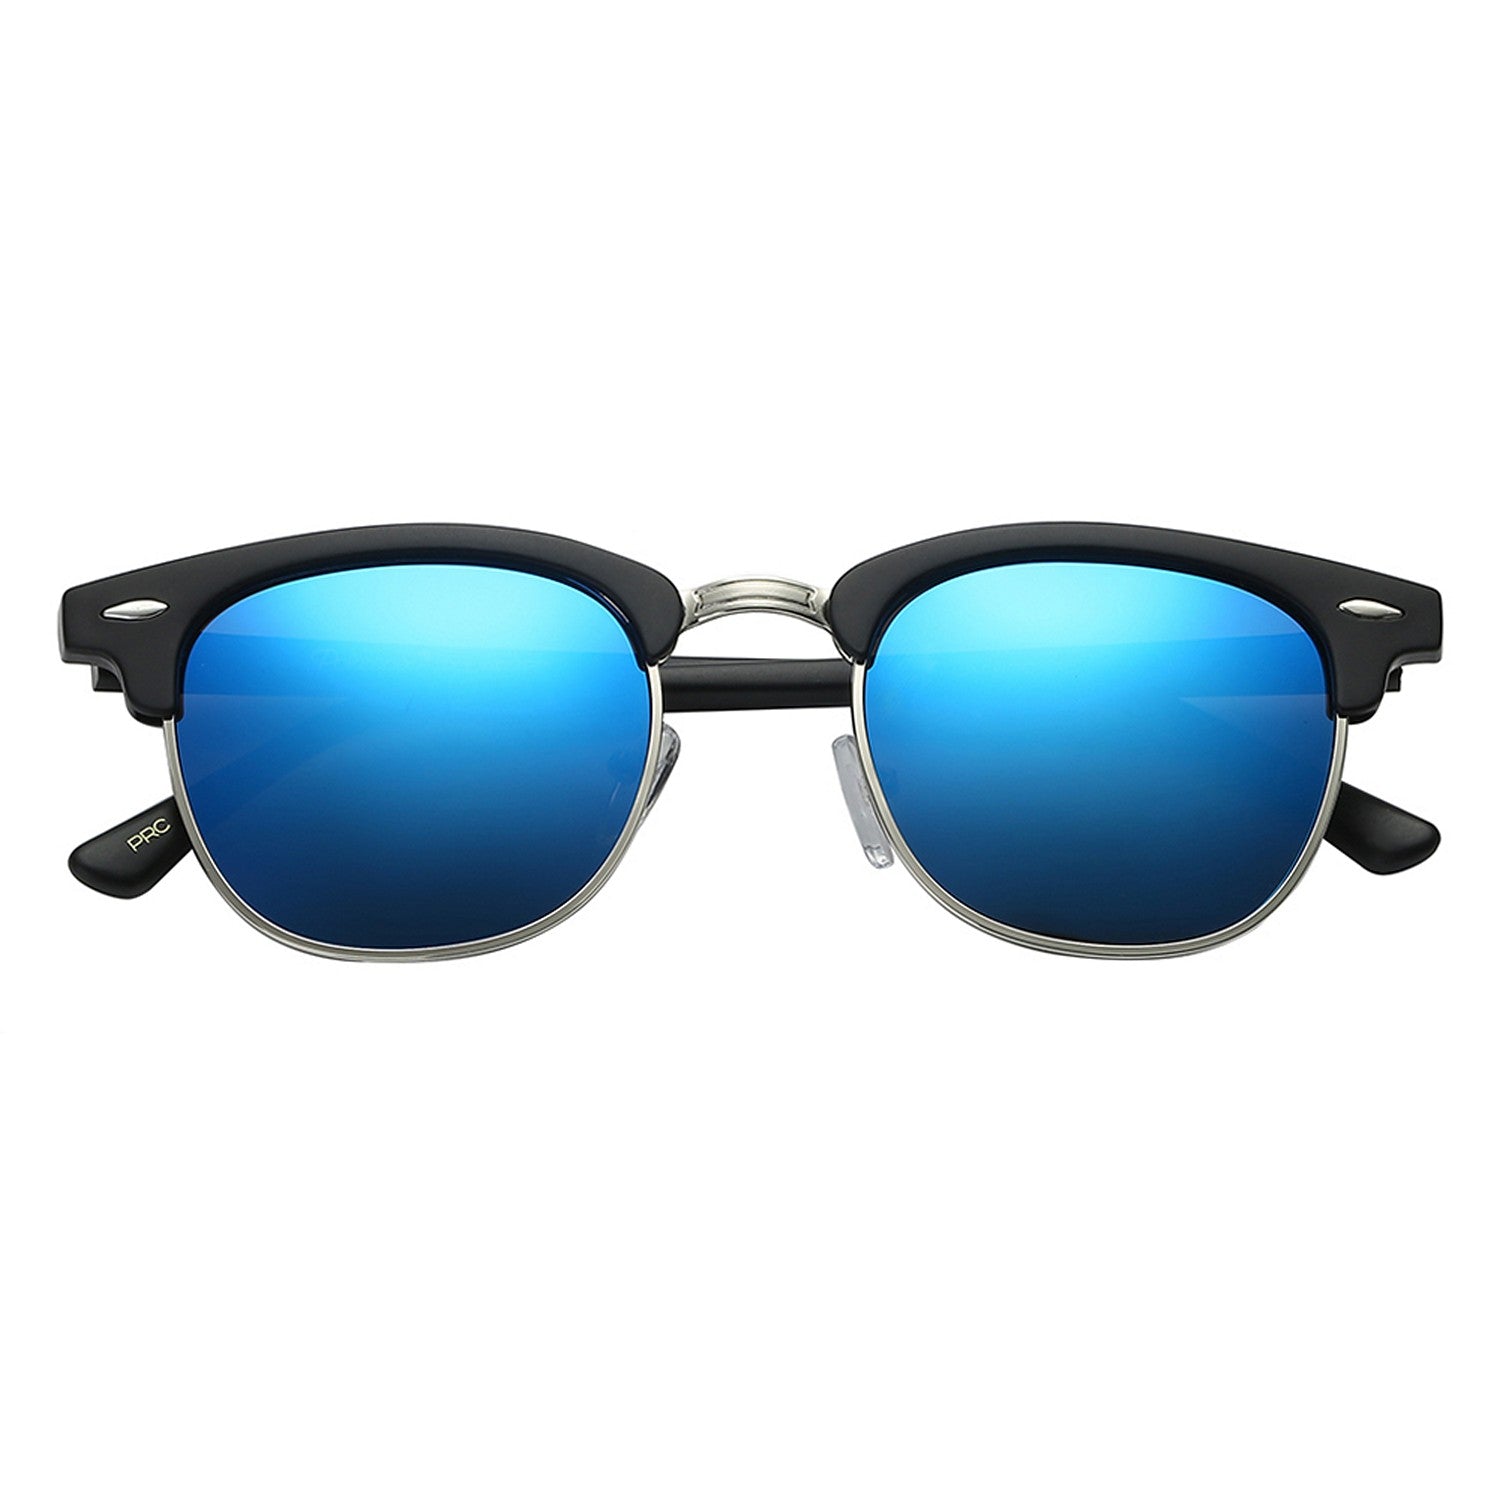 Polarspex Polarized Malcom Half Frame Semi-Rimless Style Unisex Sunglasses with Matte Black Frames and Ice Blue Lenses